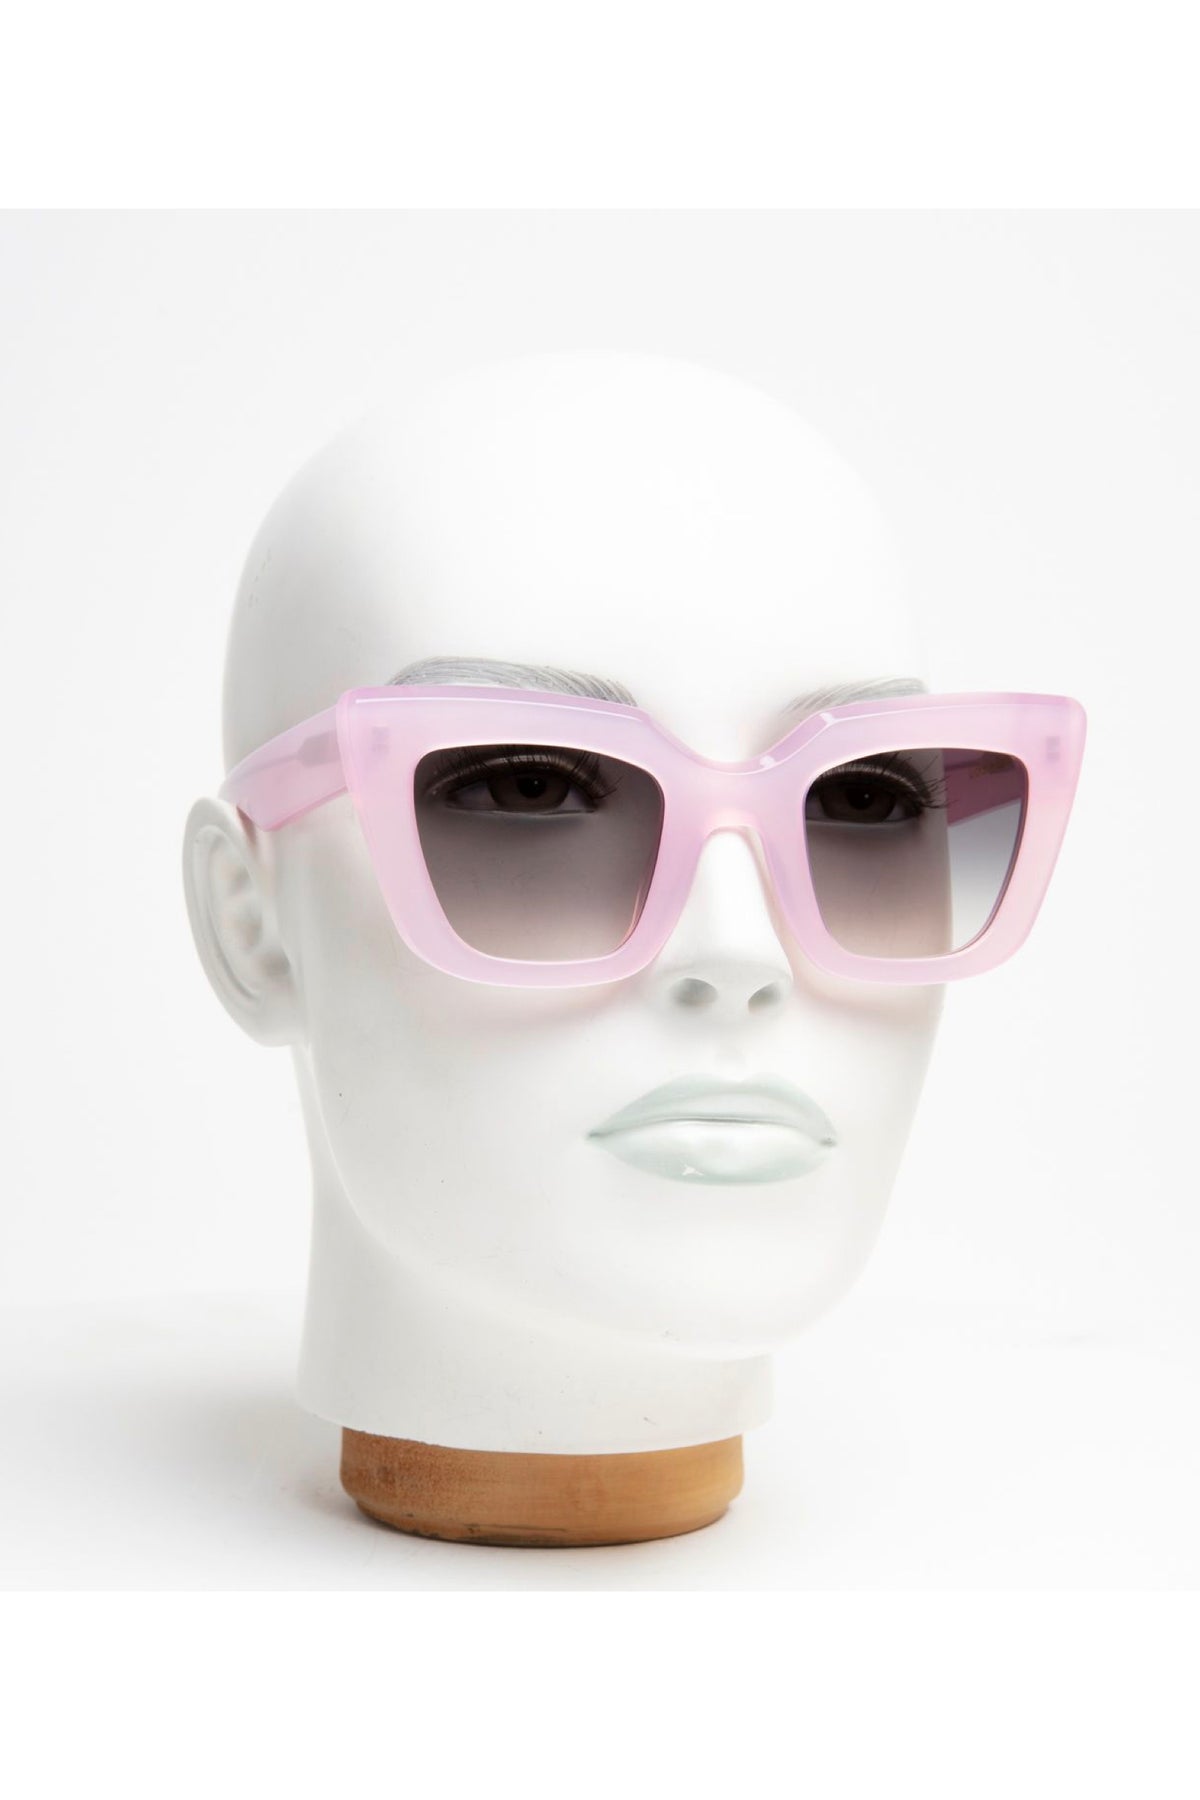 Lickety Split Opalescent Pink Sunglasses